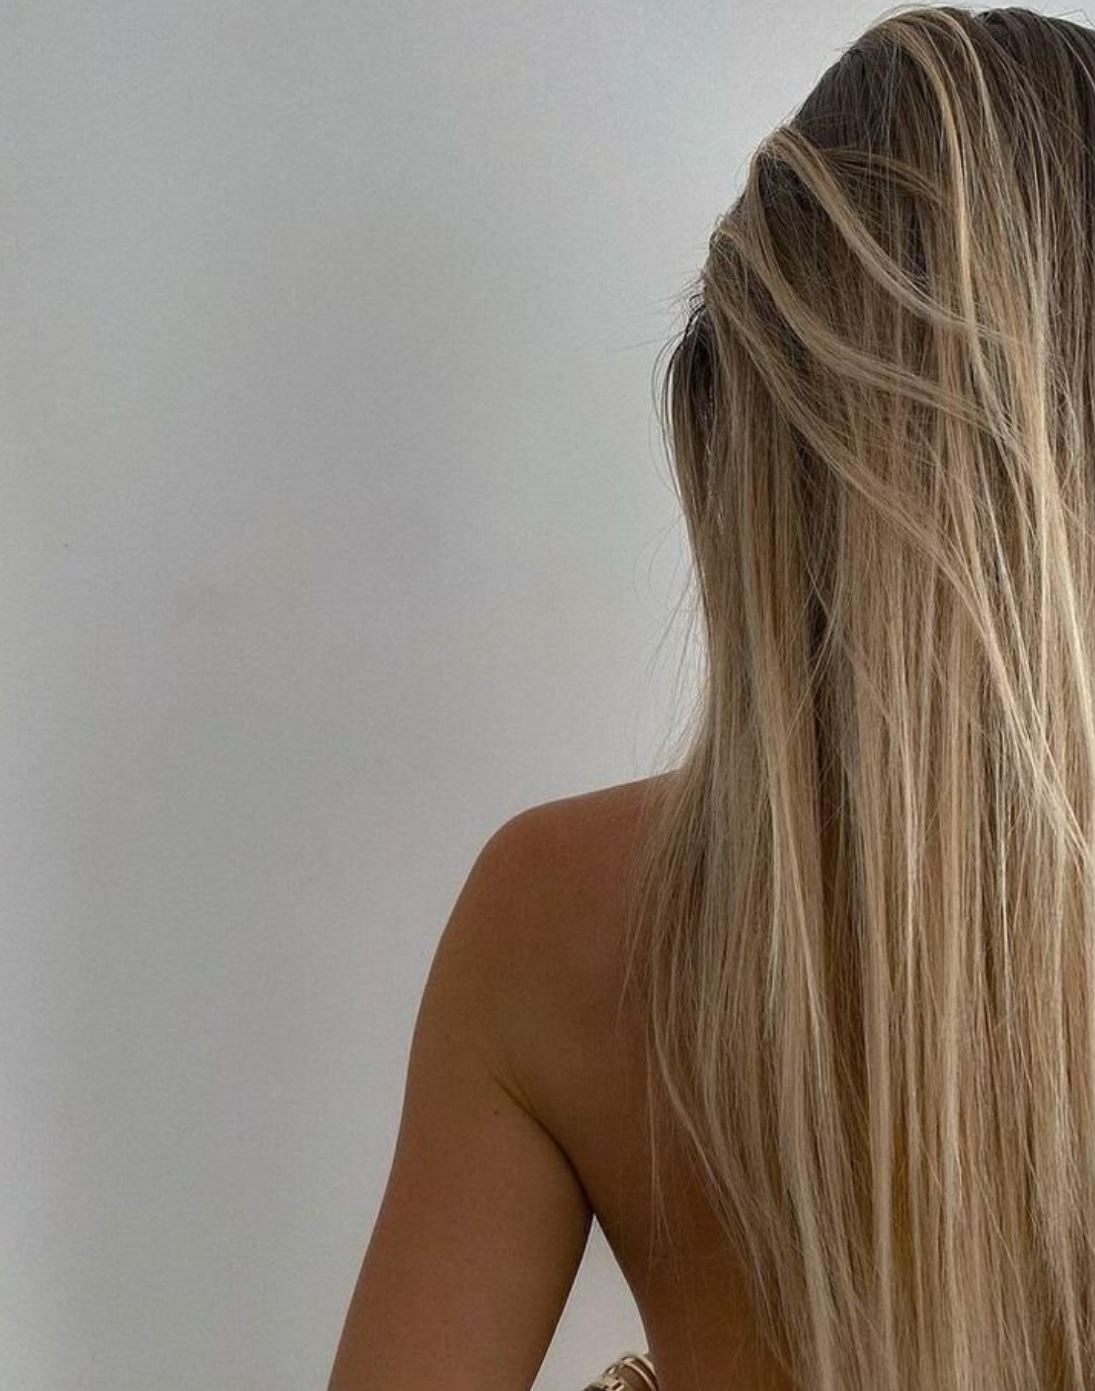 naked shoulder of Ukrainian blonde girl viewed from the back